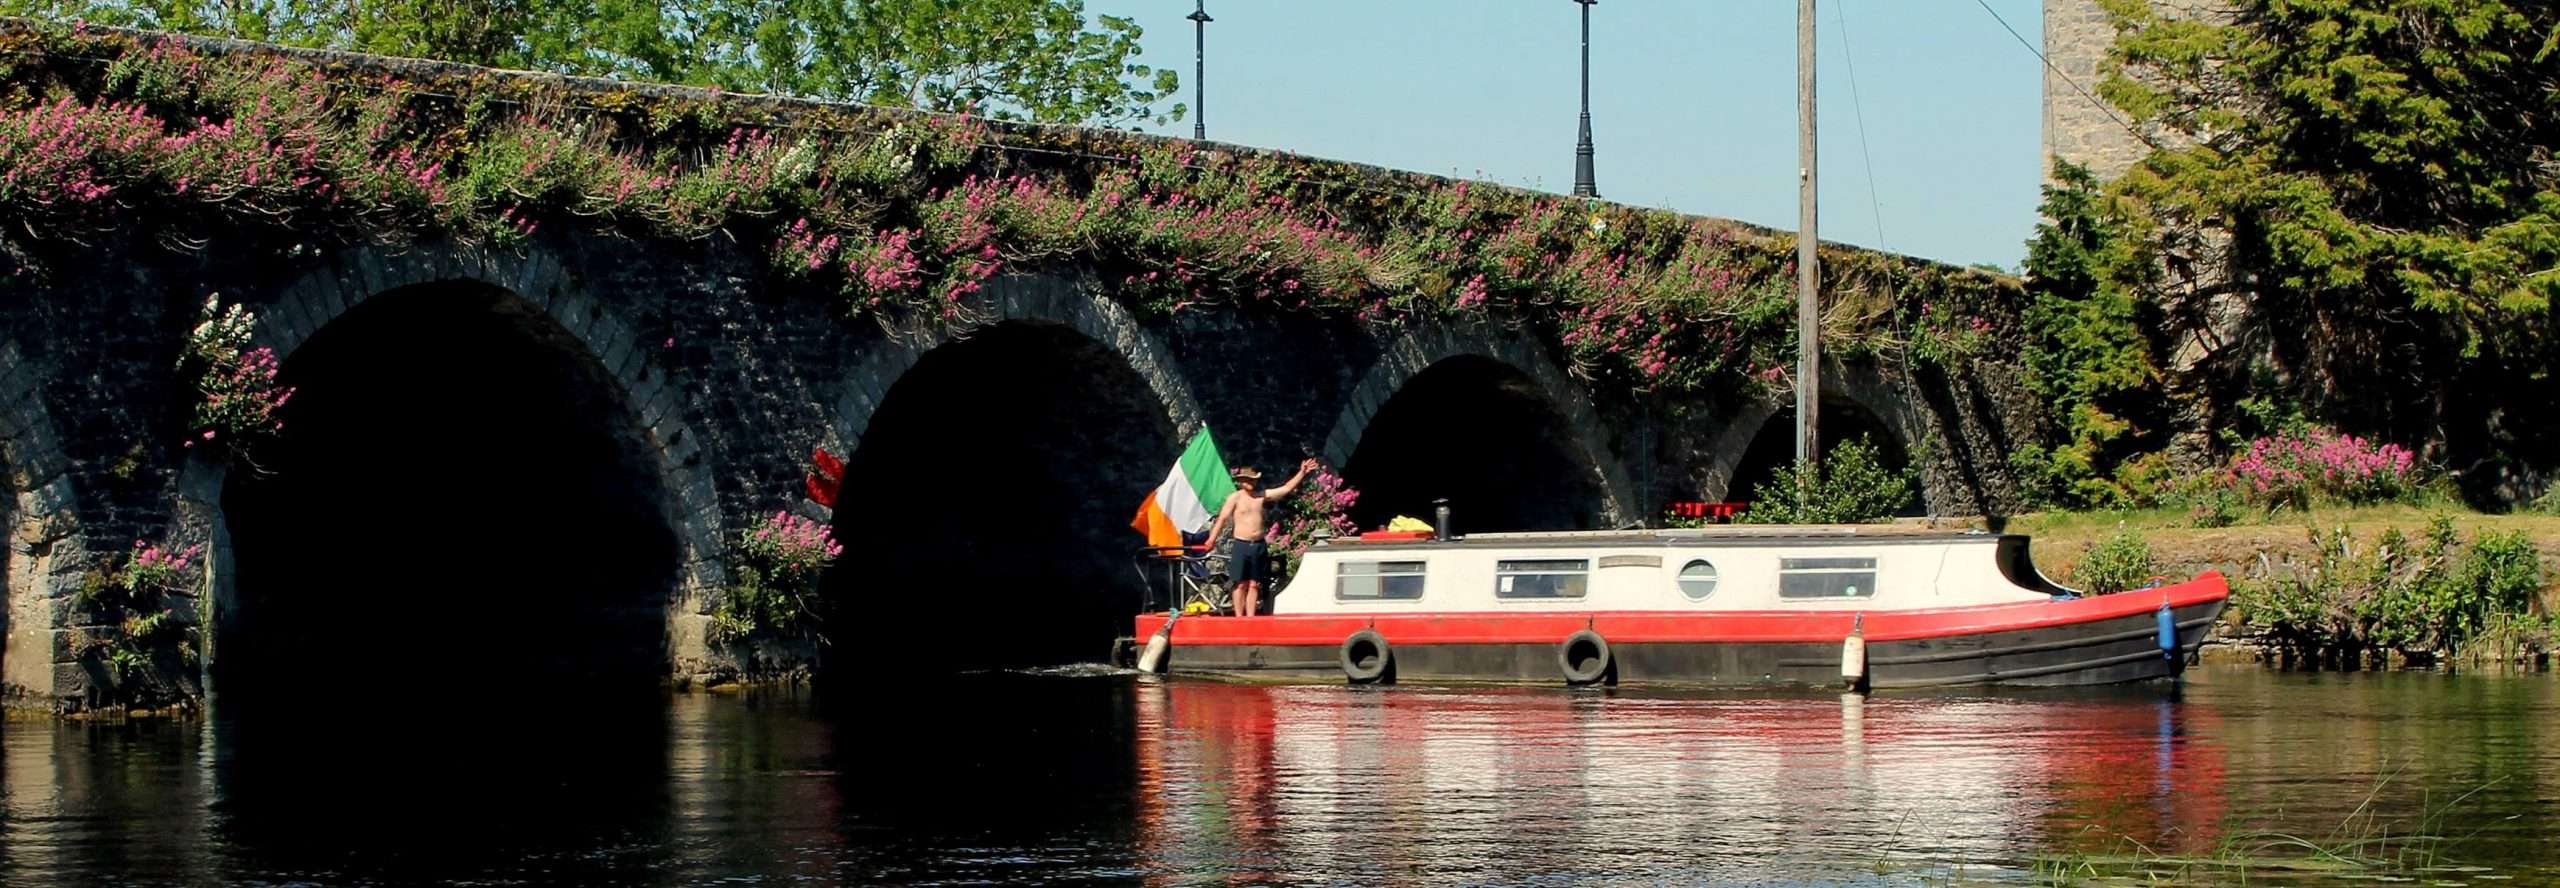 Cliff Reid on his barge on the river Barrow at Goresbridge, Kilkenny, Ireland